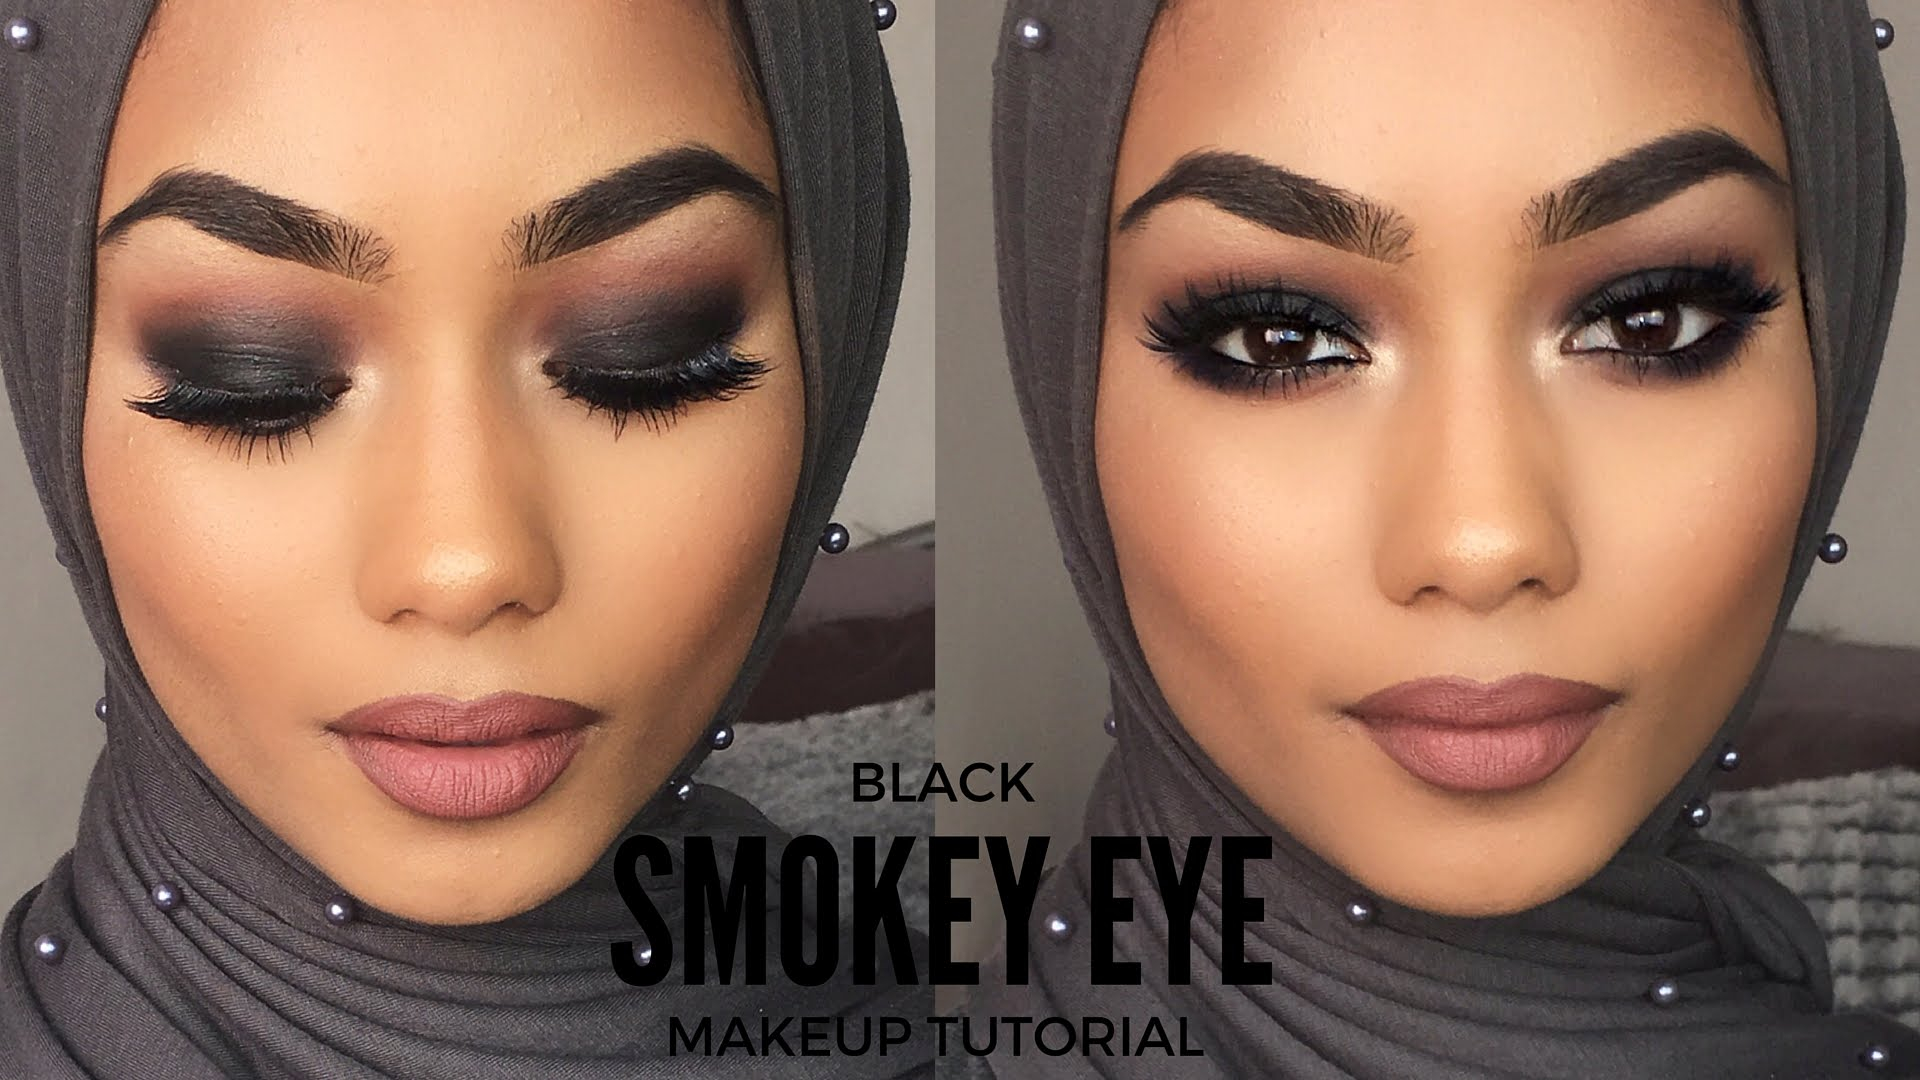 Dark Eyes Makeup How To Apply Dark Eye Makeup Videos On Flipboard Howtoguides